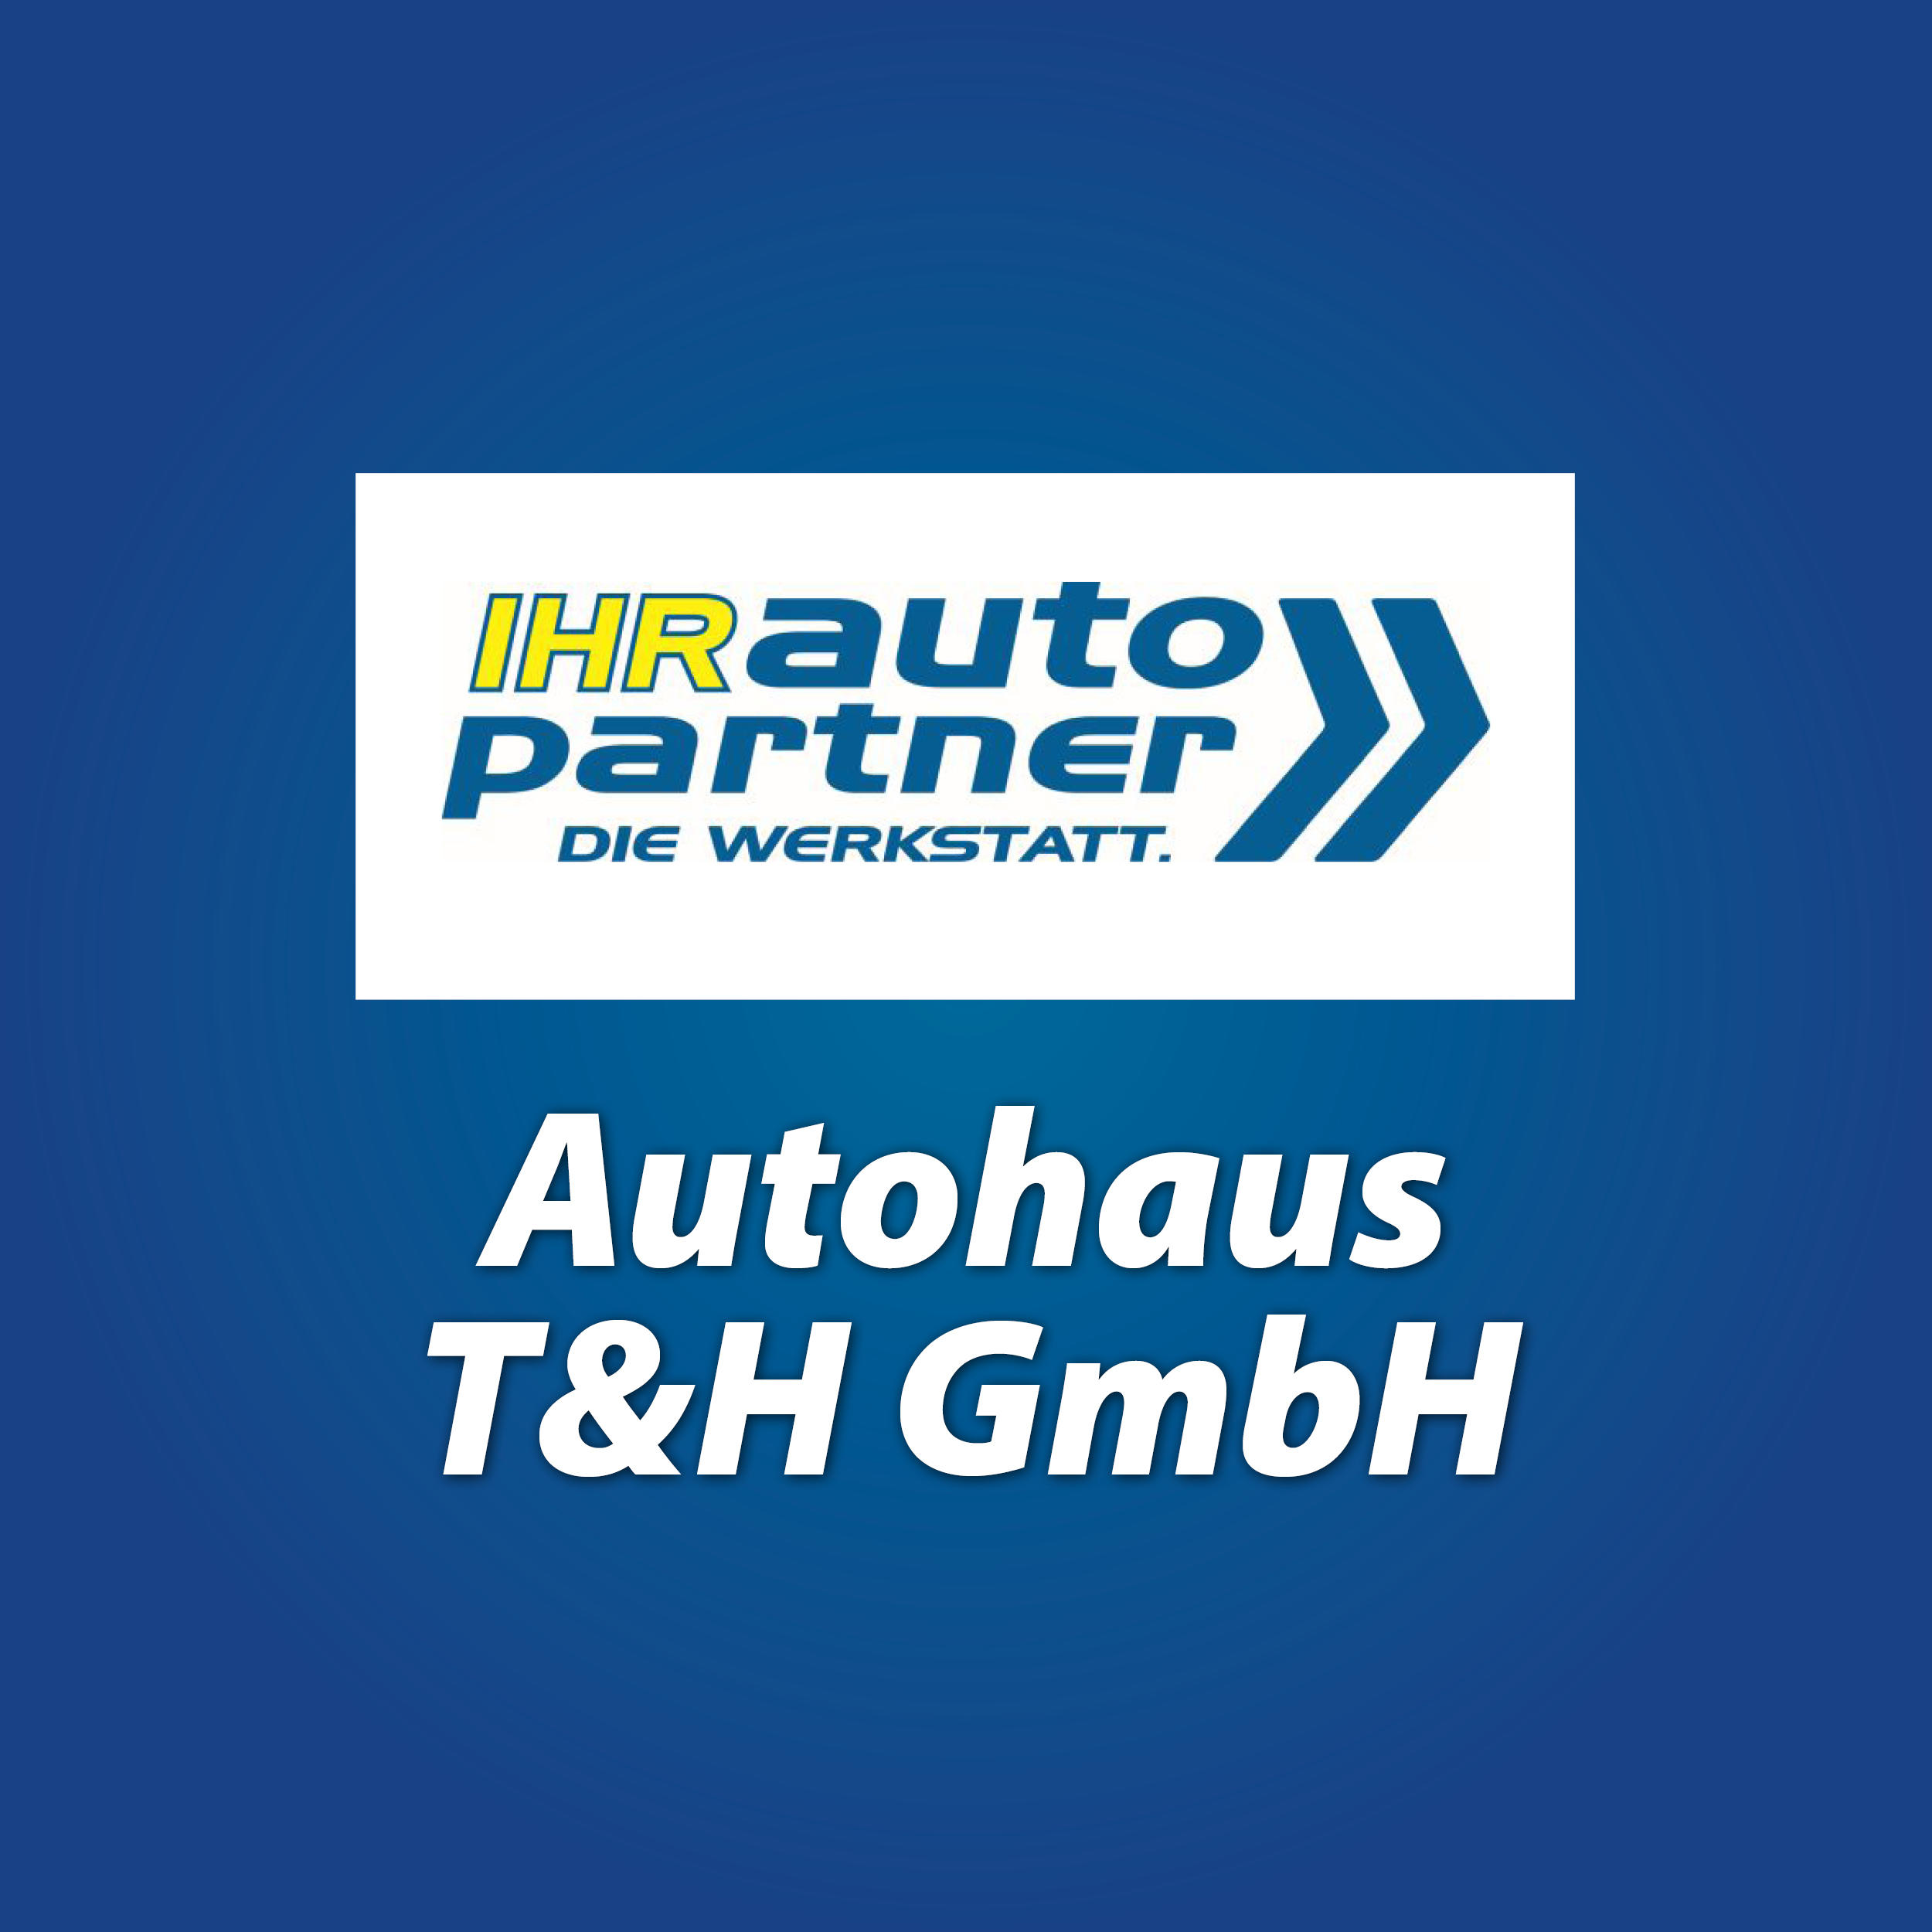 Autohaus T&H GmbH  